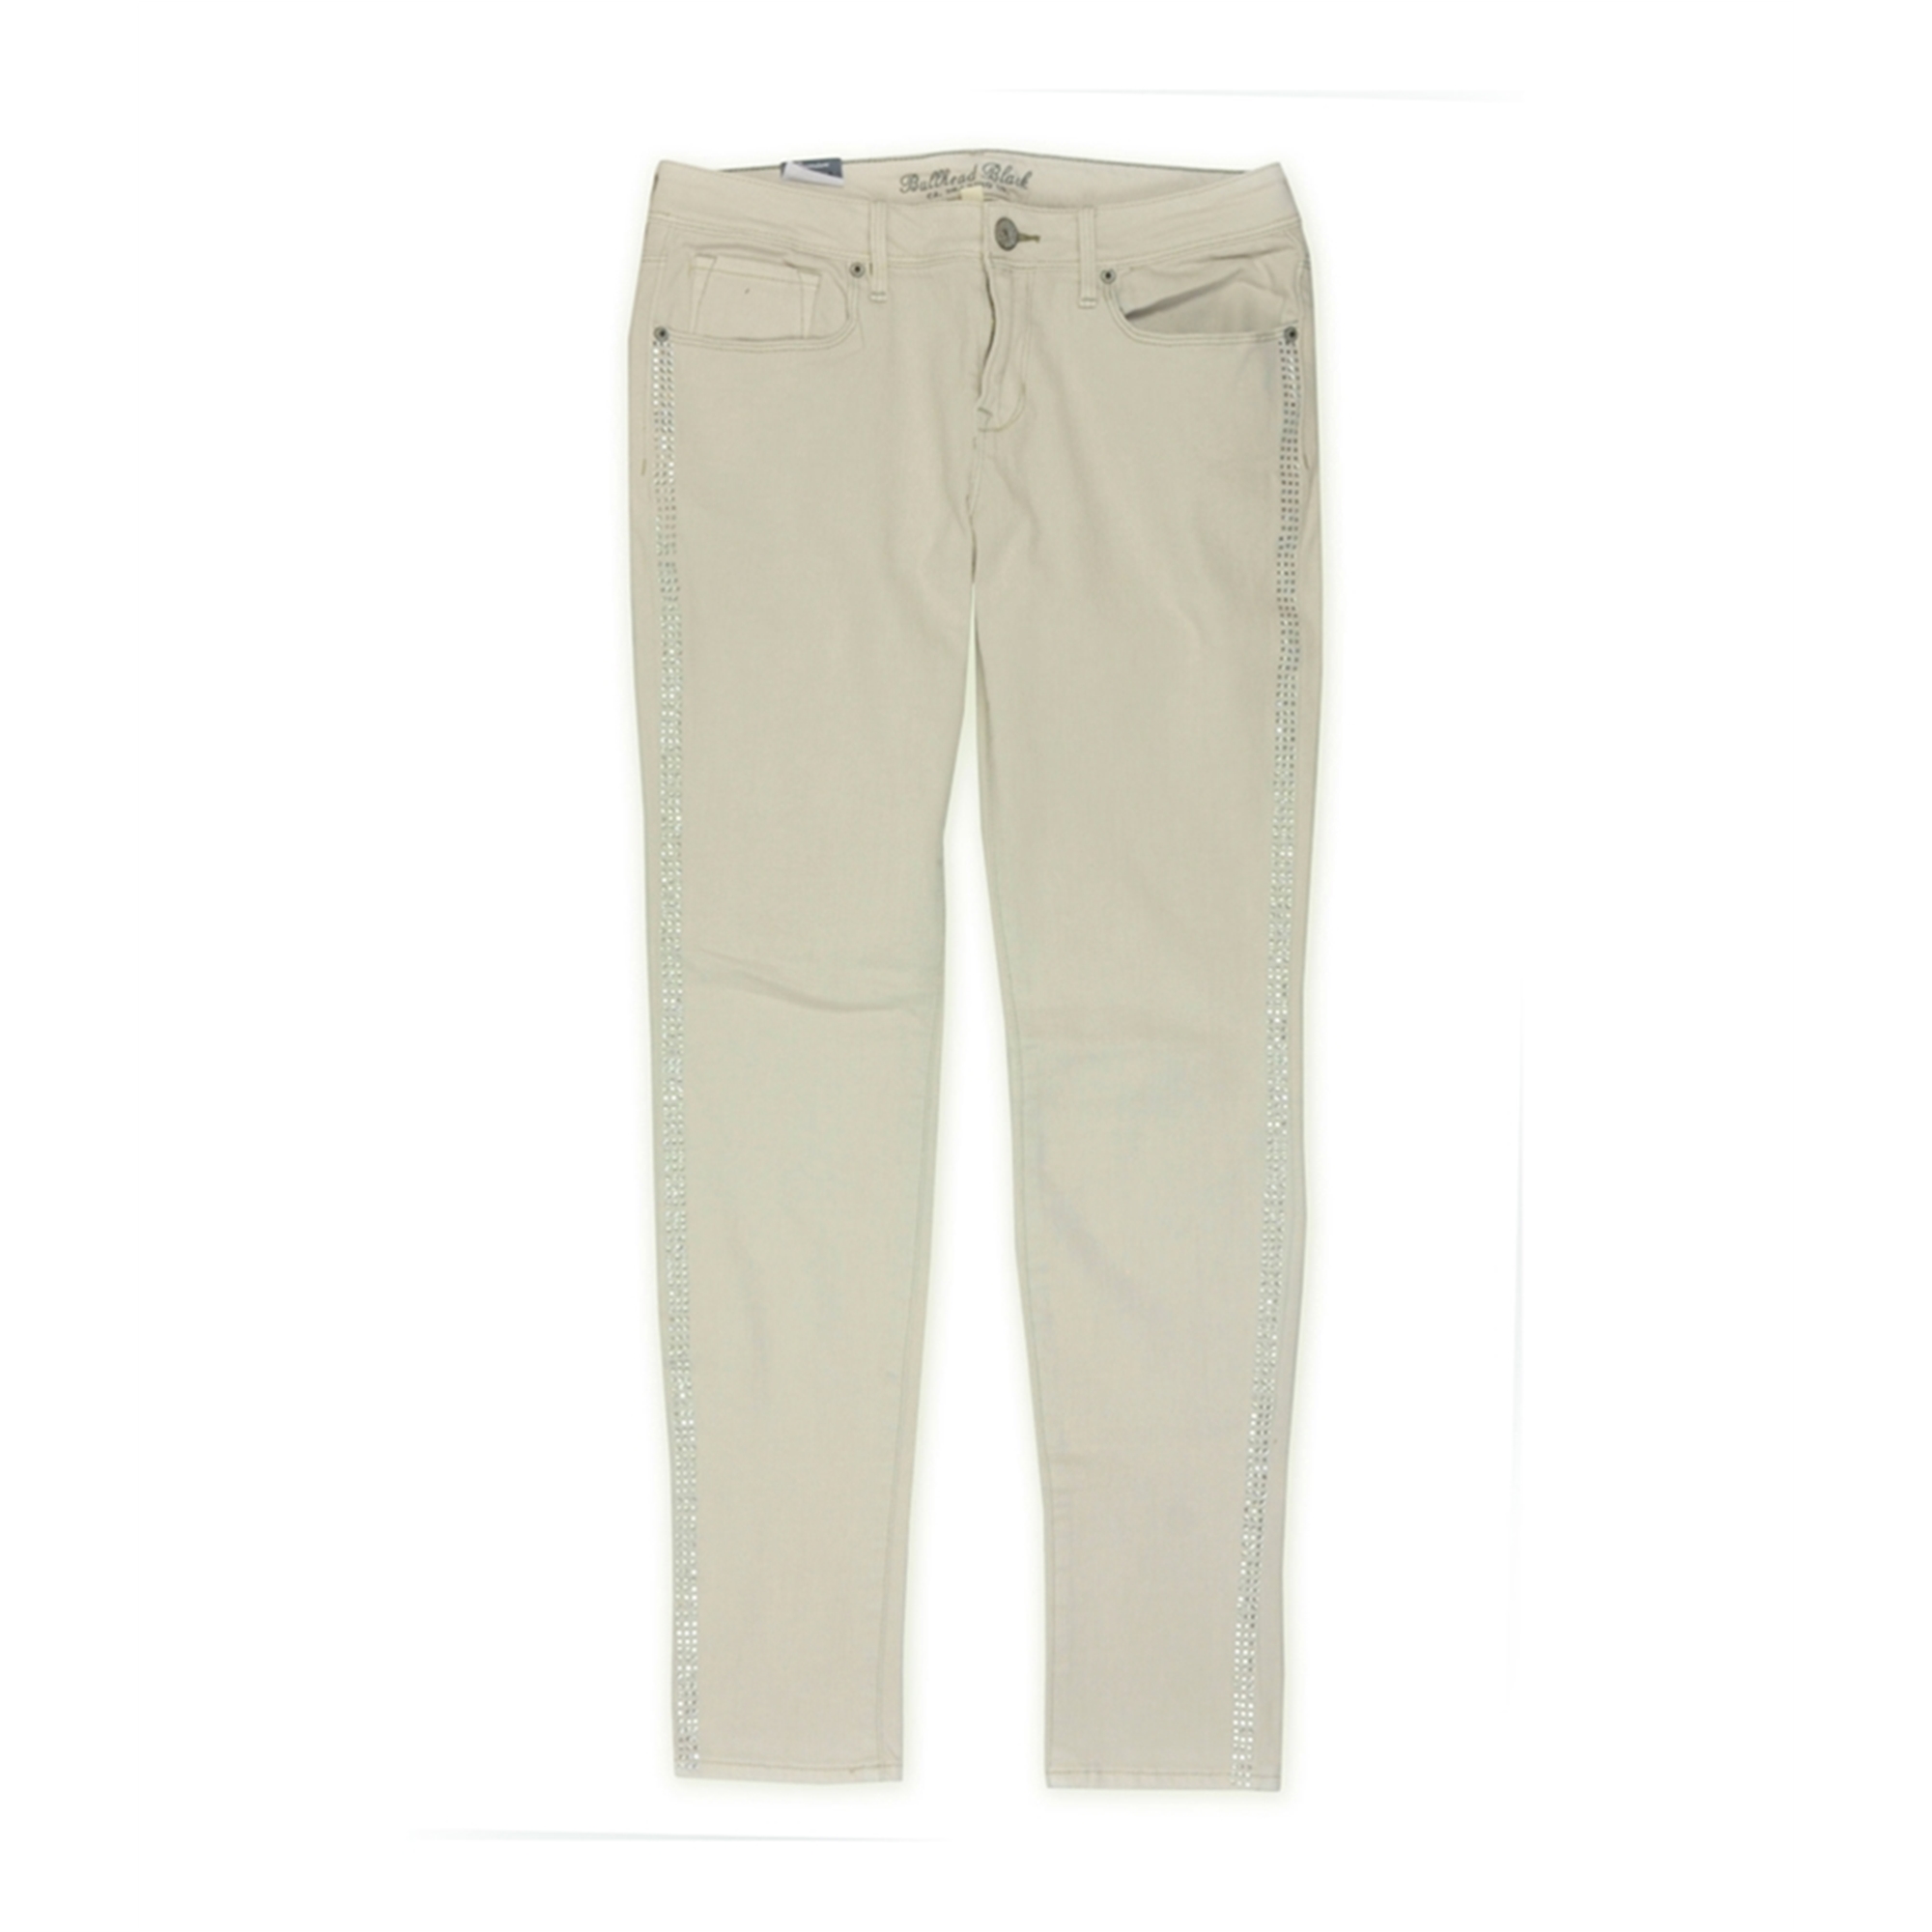 Bullhead Denim Co. Womens Premium Sparkle Skinniest Skinny Fit Jeans, Beige, 11 - image 1 of 2